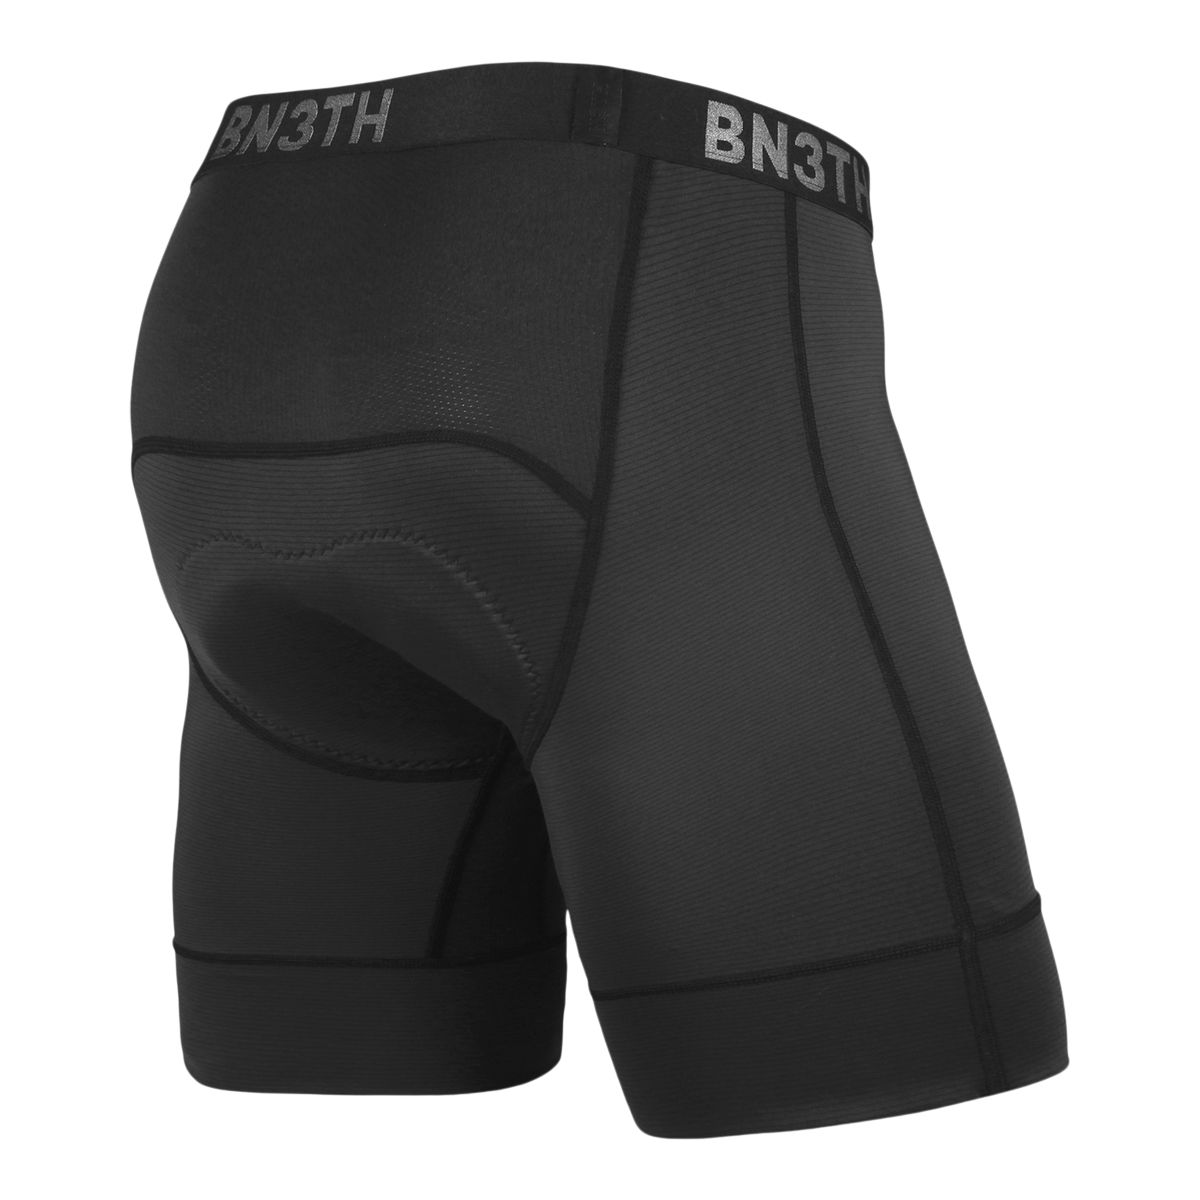 BN3TH Men's North Shore Liner Bike Shorts